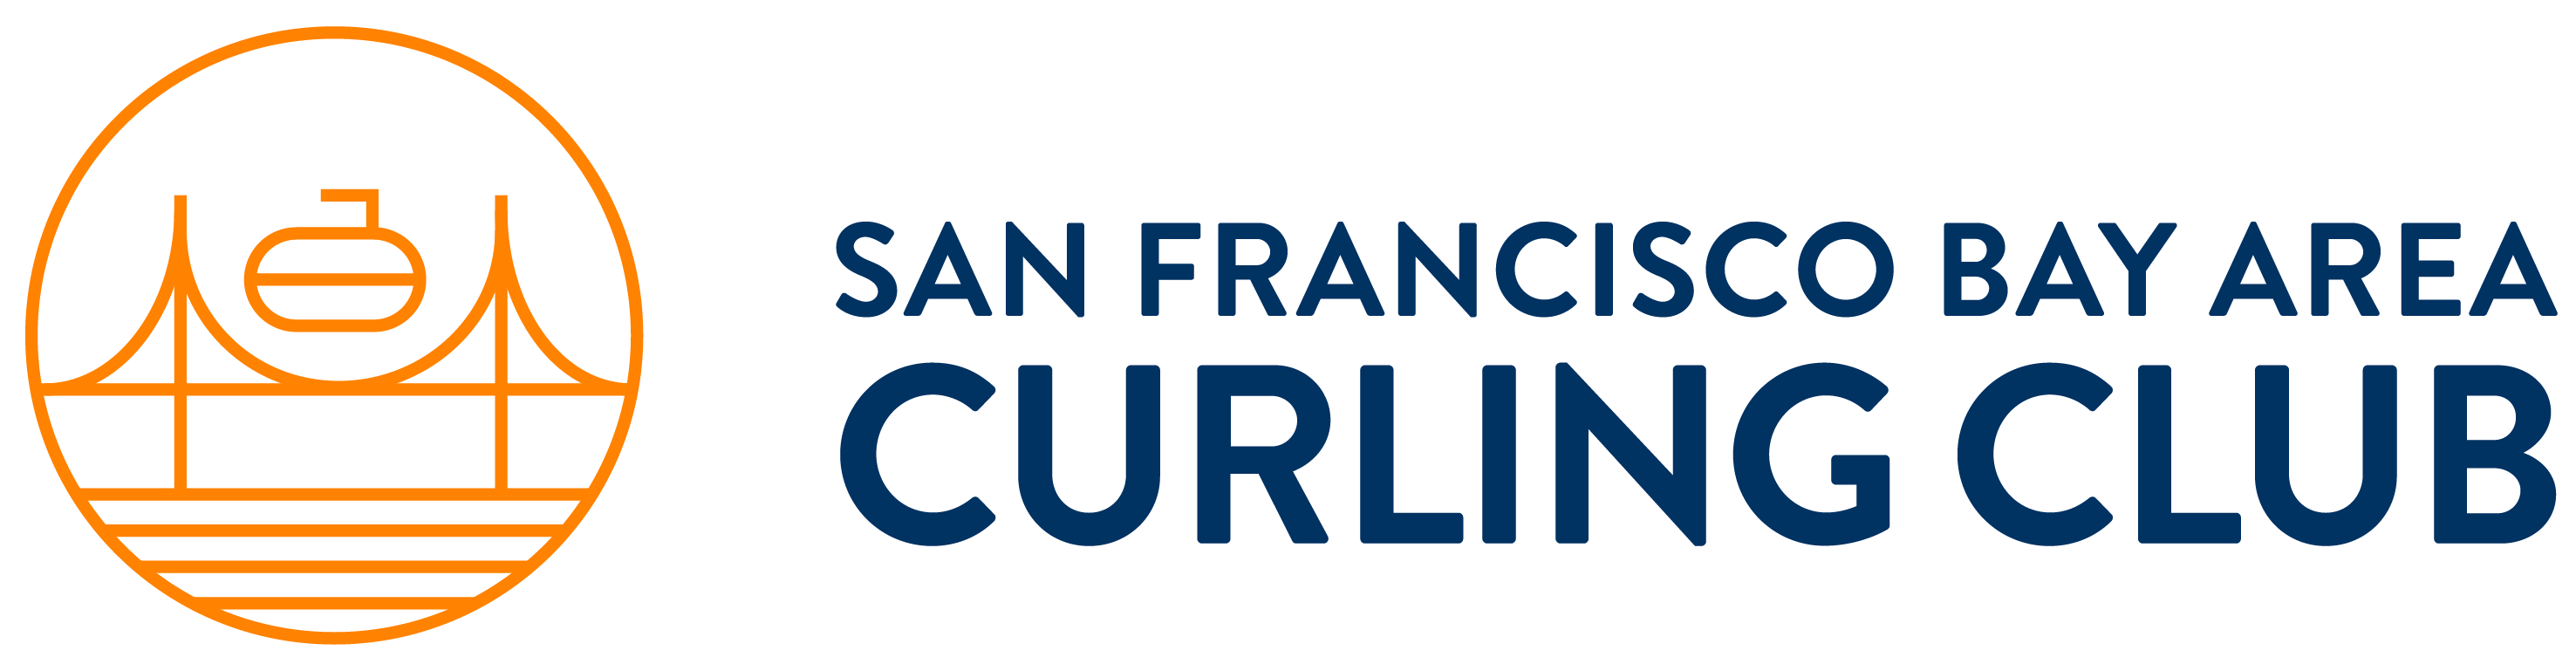 San Francisco Bay Area Curling Club